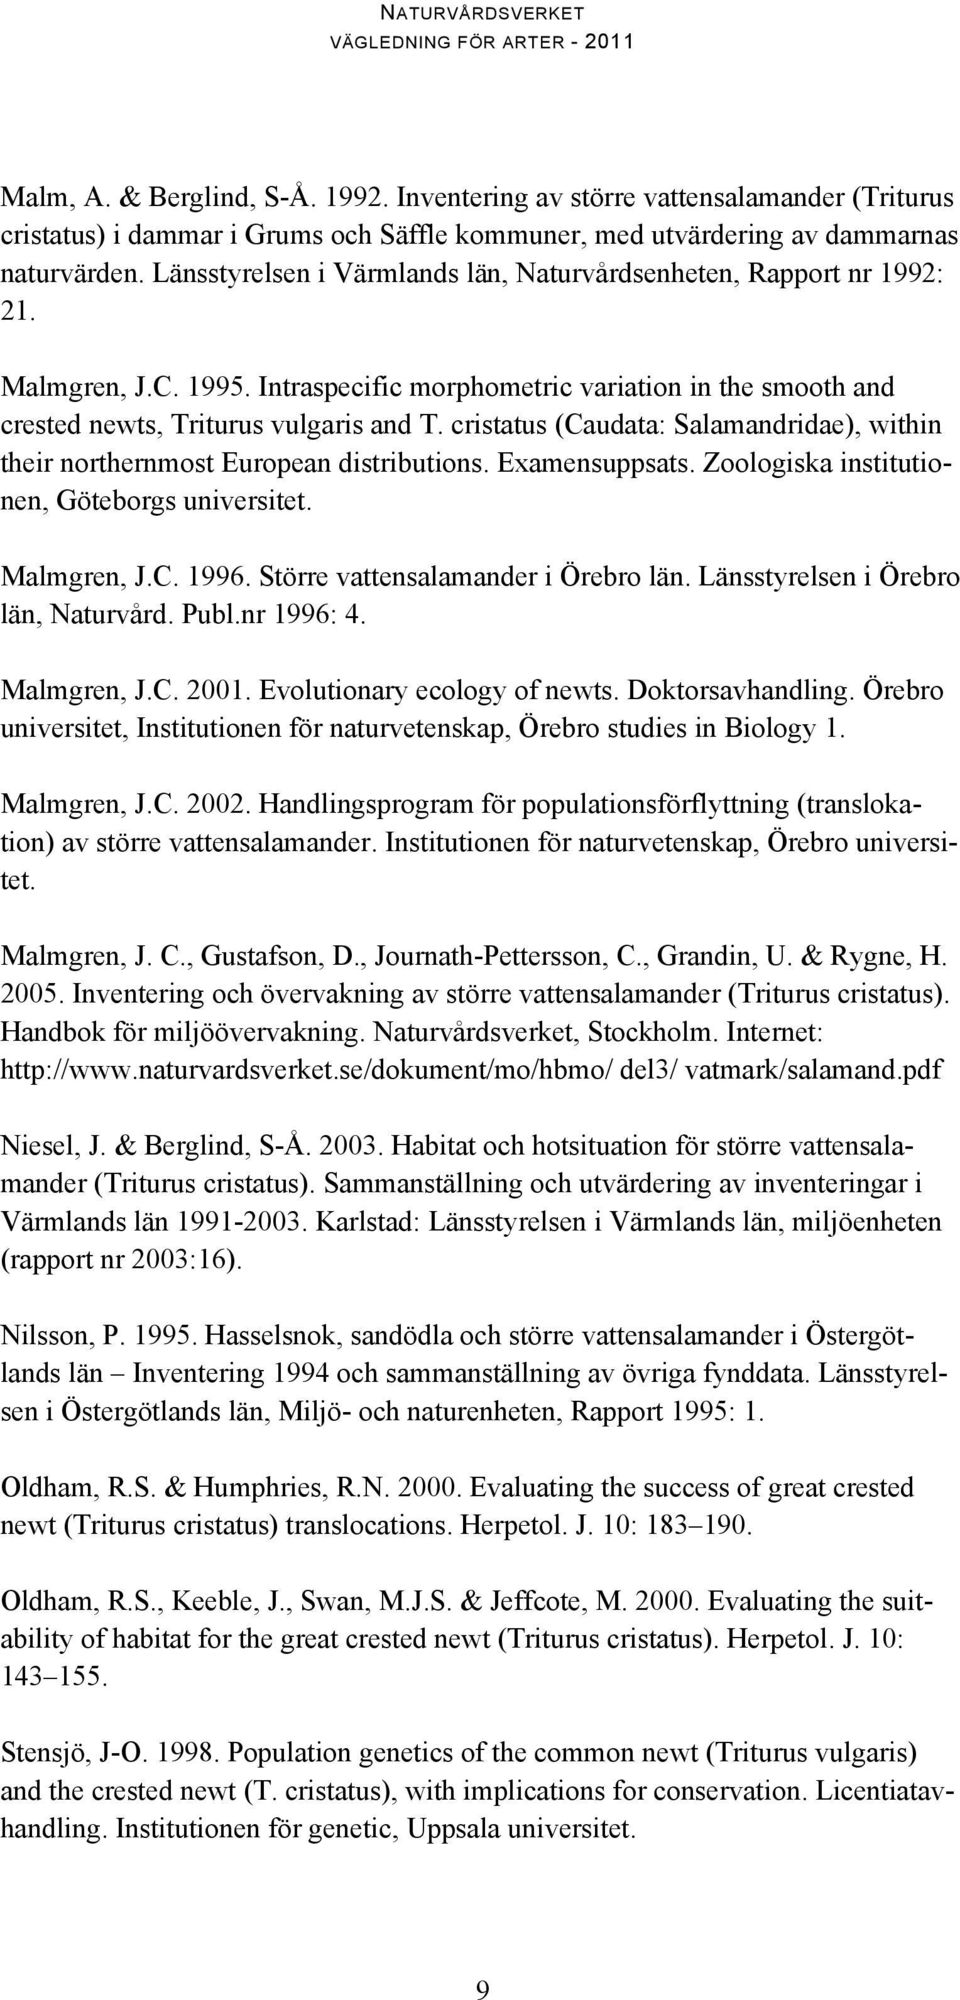 cristatus (Caudata: Salamandridae), within their northernmost European distributions. Examensuppsats. Zoologiska institutionen, Göteborgs universitet. Malmgren, J.C. 1996.